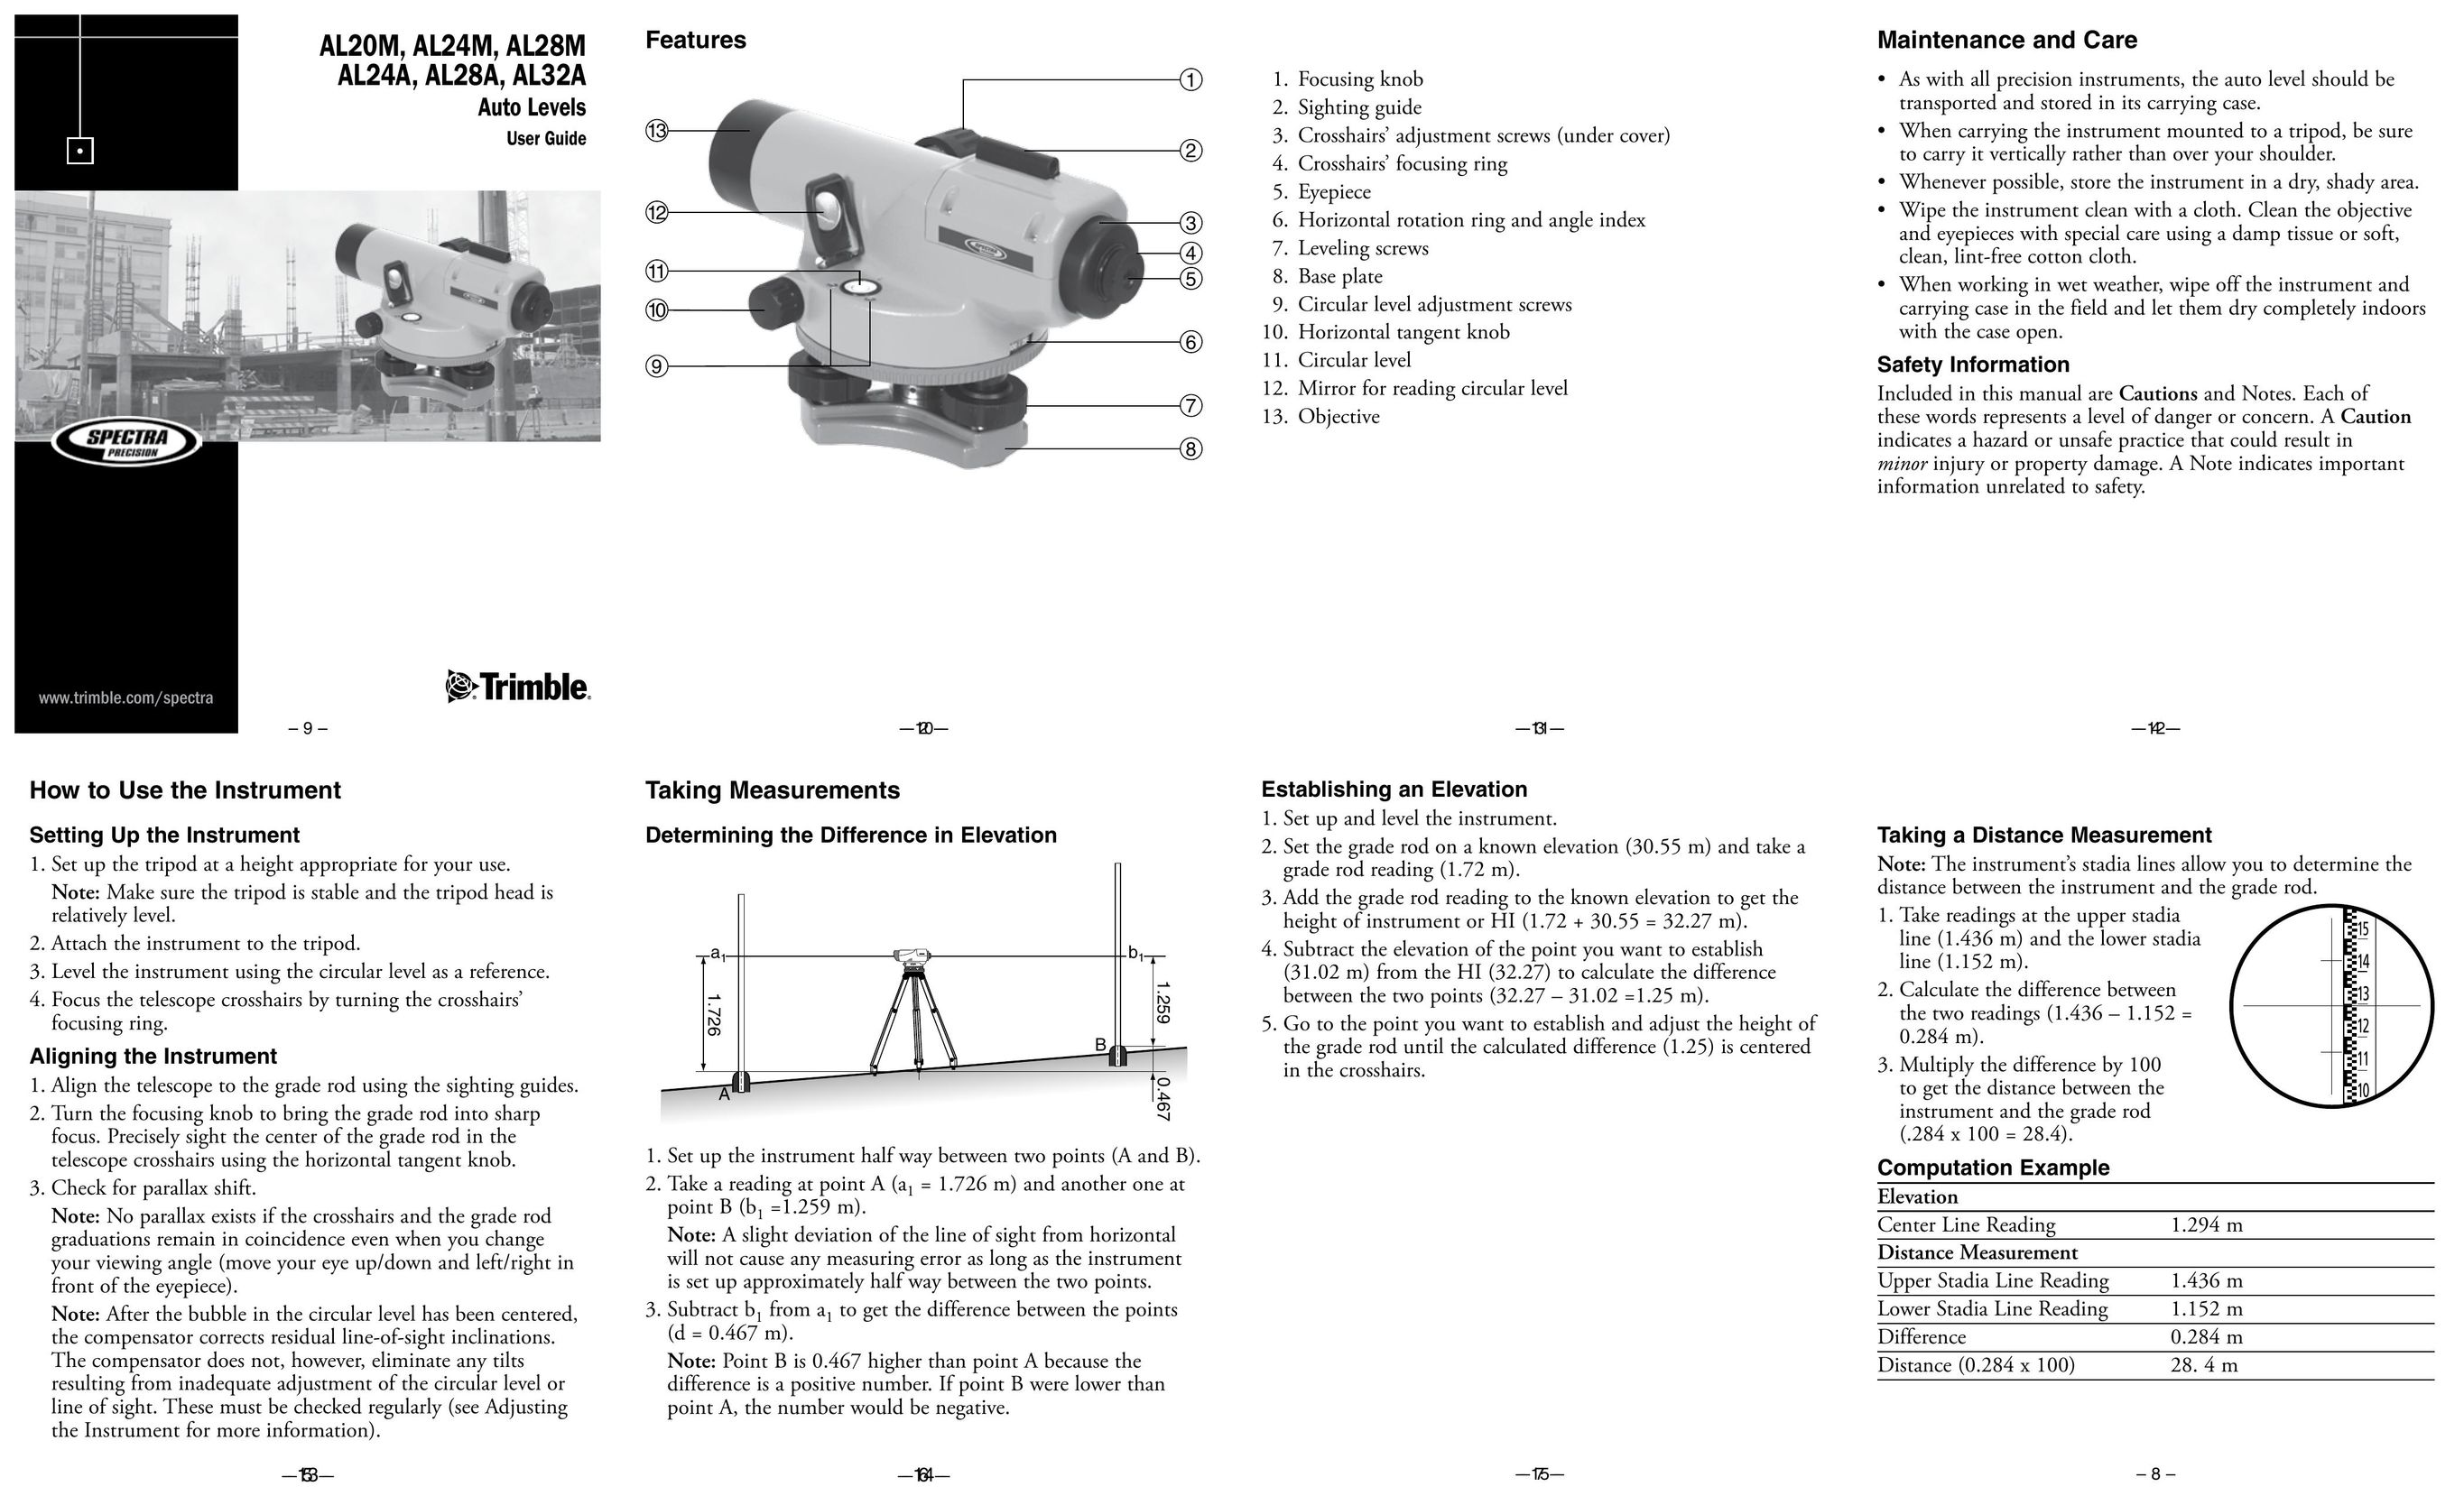 Spectra AL20M Laser Level User Manual